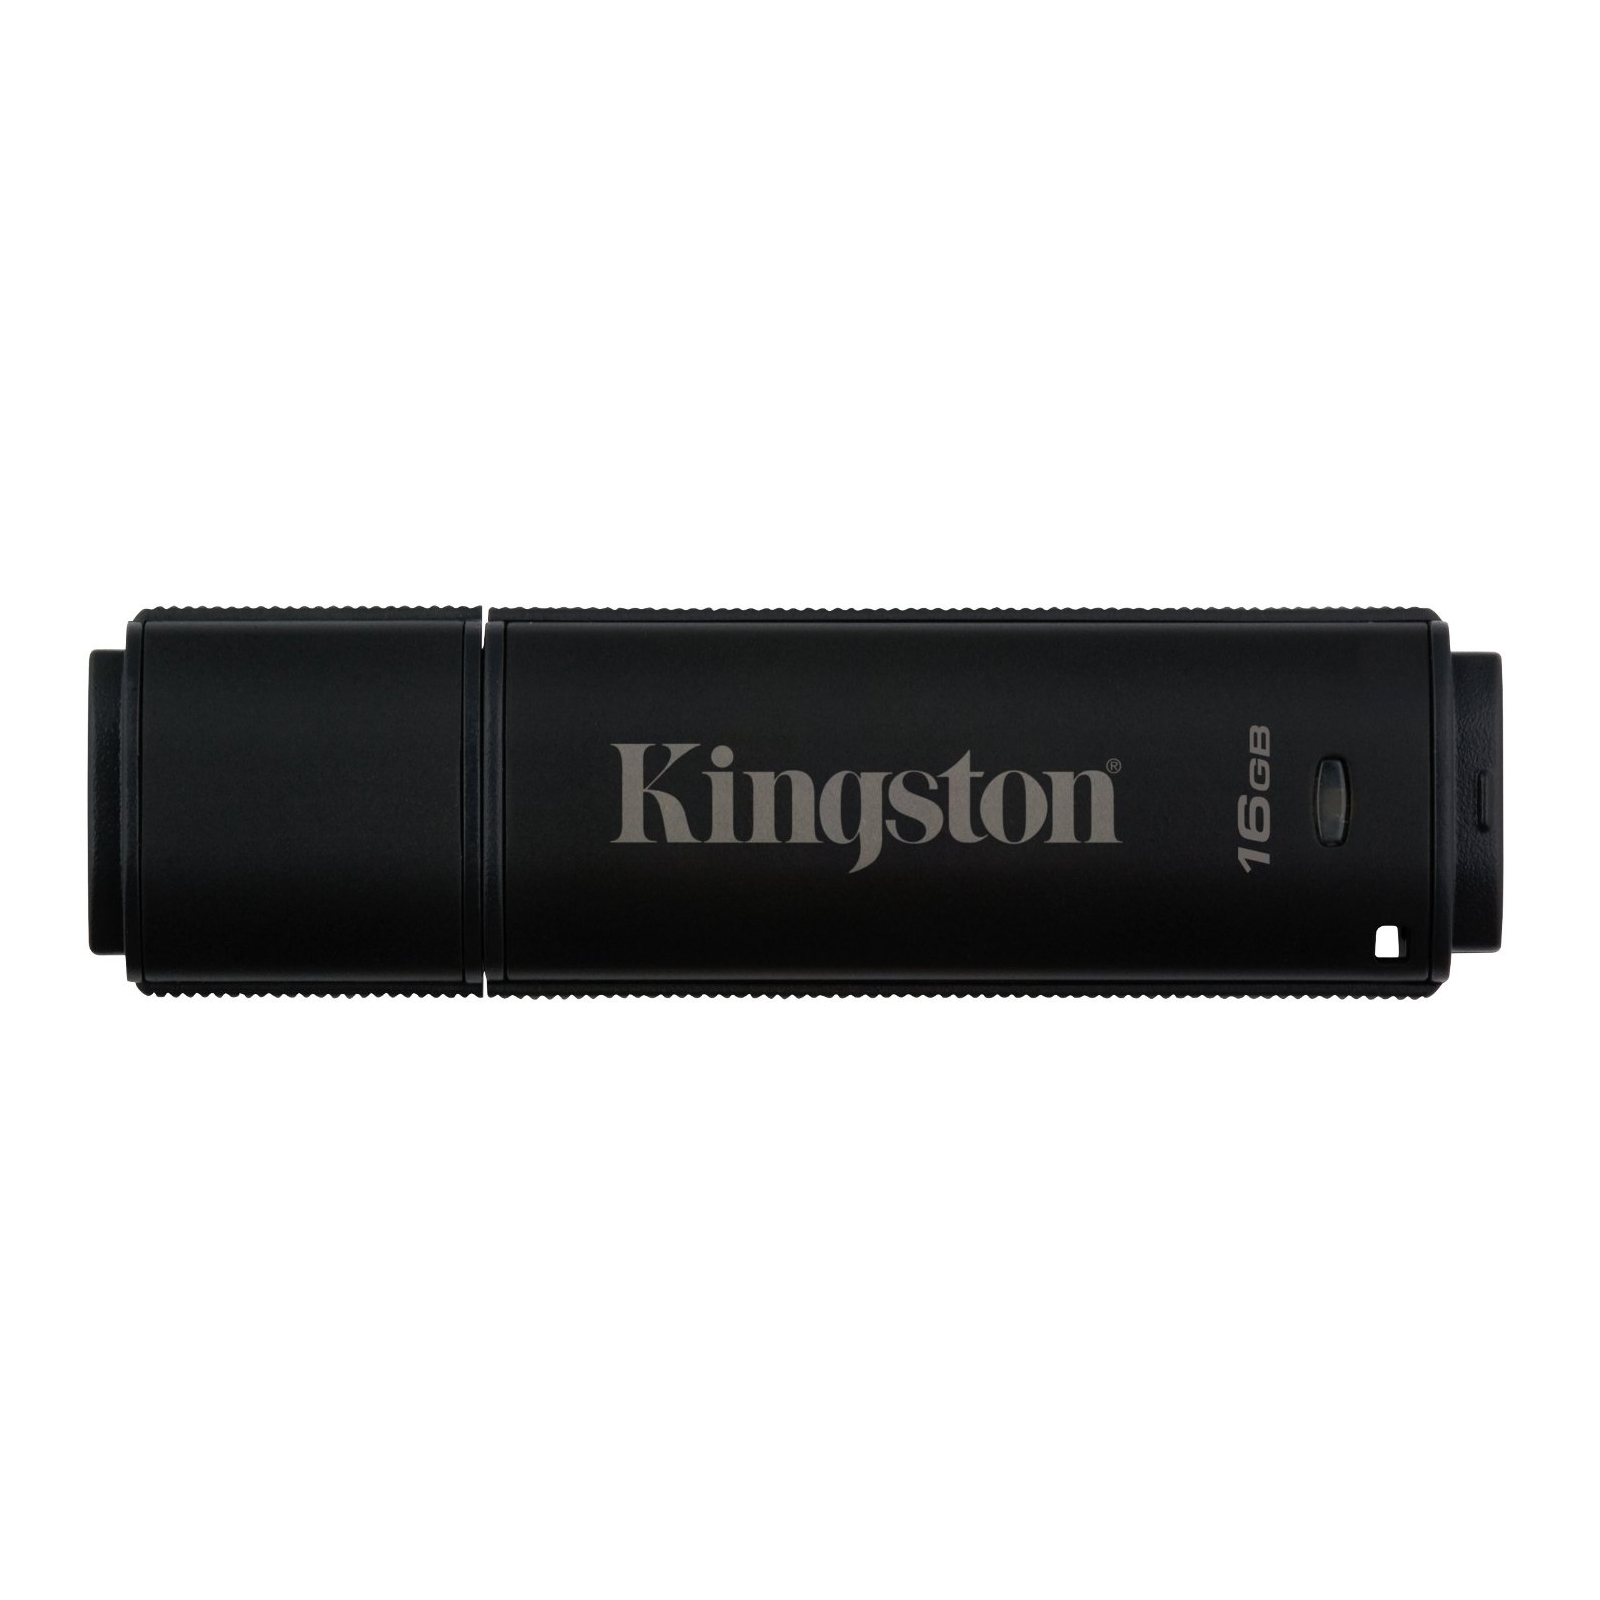 USB флеш накопитель Kingston 64GB DataTraveler 4000 G2 Metal Black USB 3.0 (DT4000G2/64GB)